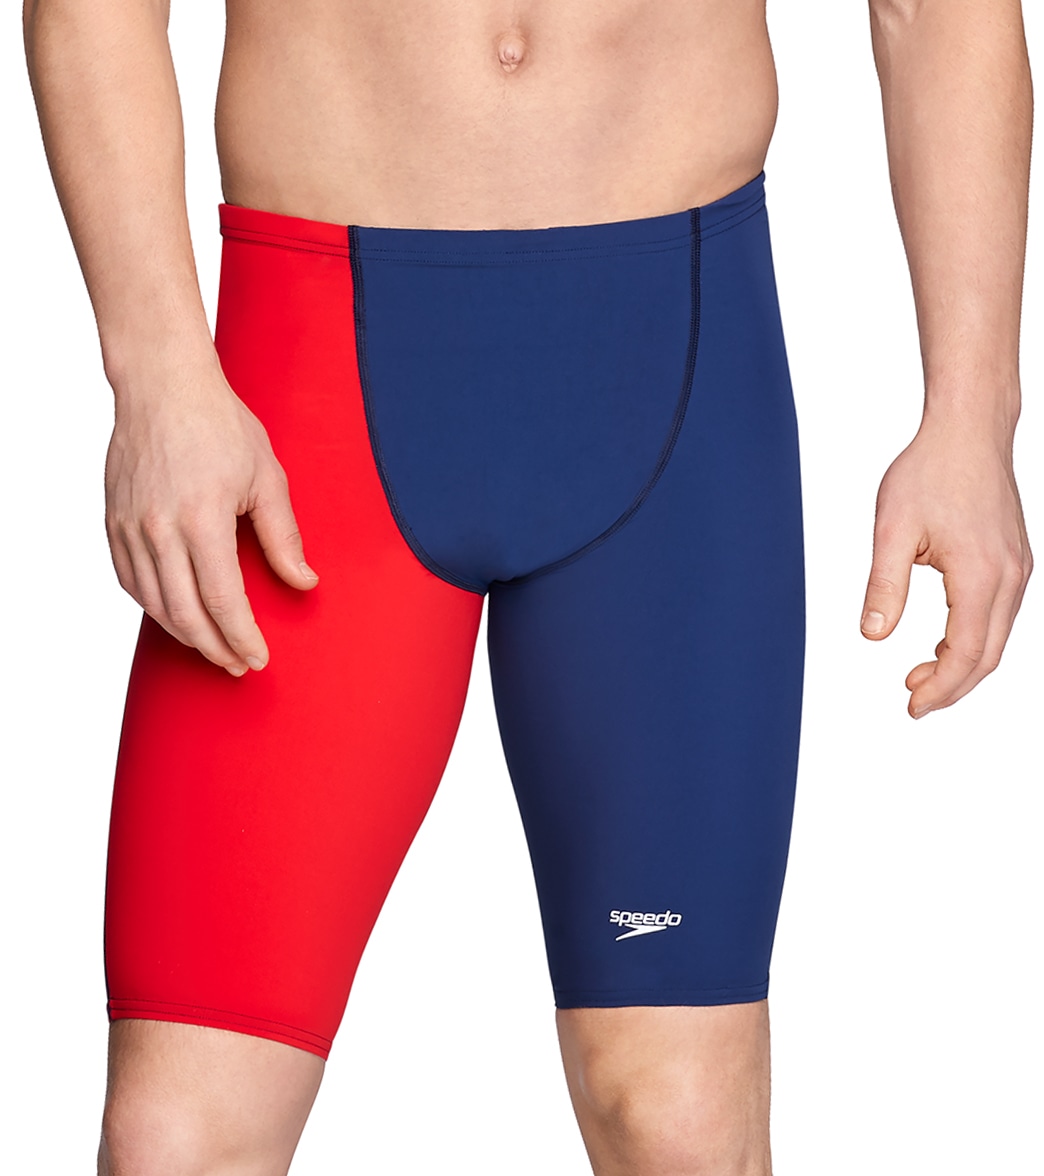 Speedo Men's Lzr Racer Pro Jammer With Contrast Leg Tech Suit Swimsuit - Red/White/Blue 24 Lycra®/Nylon - Swimoutlet.com